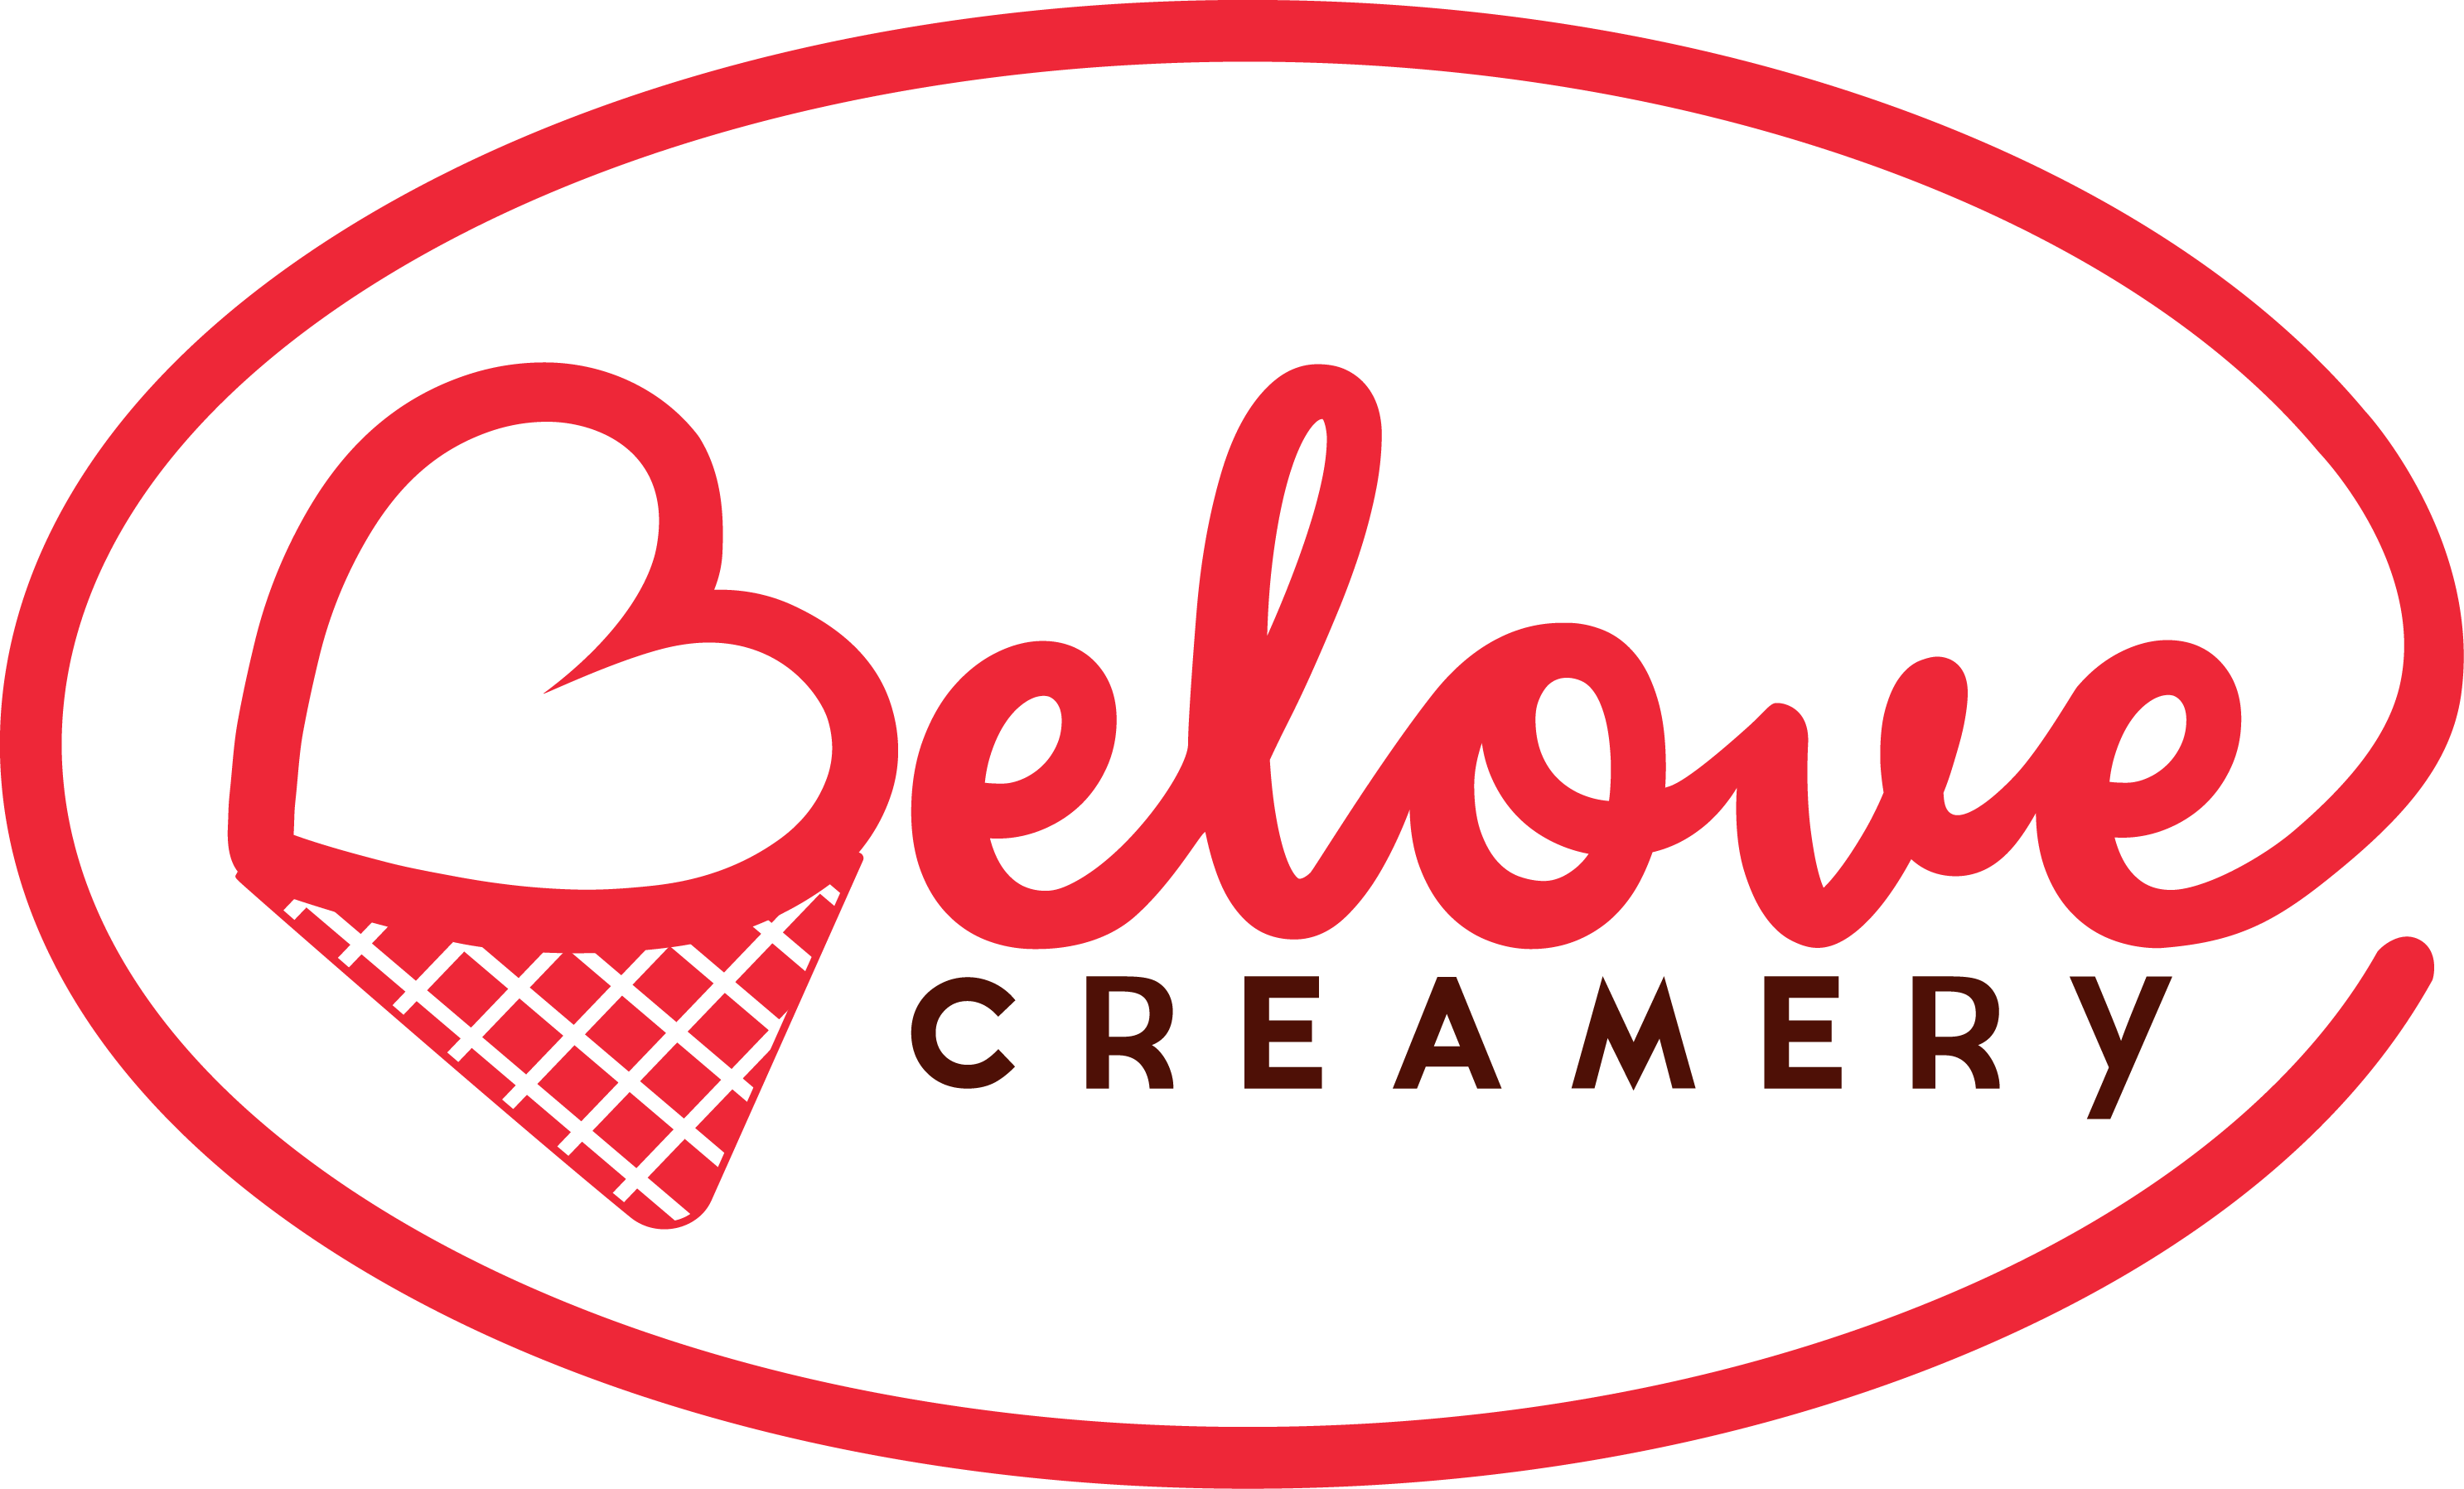 Belove Creamery